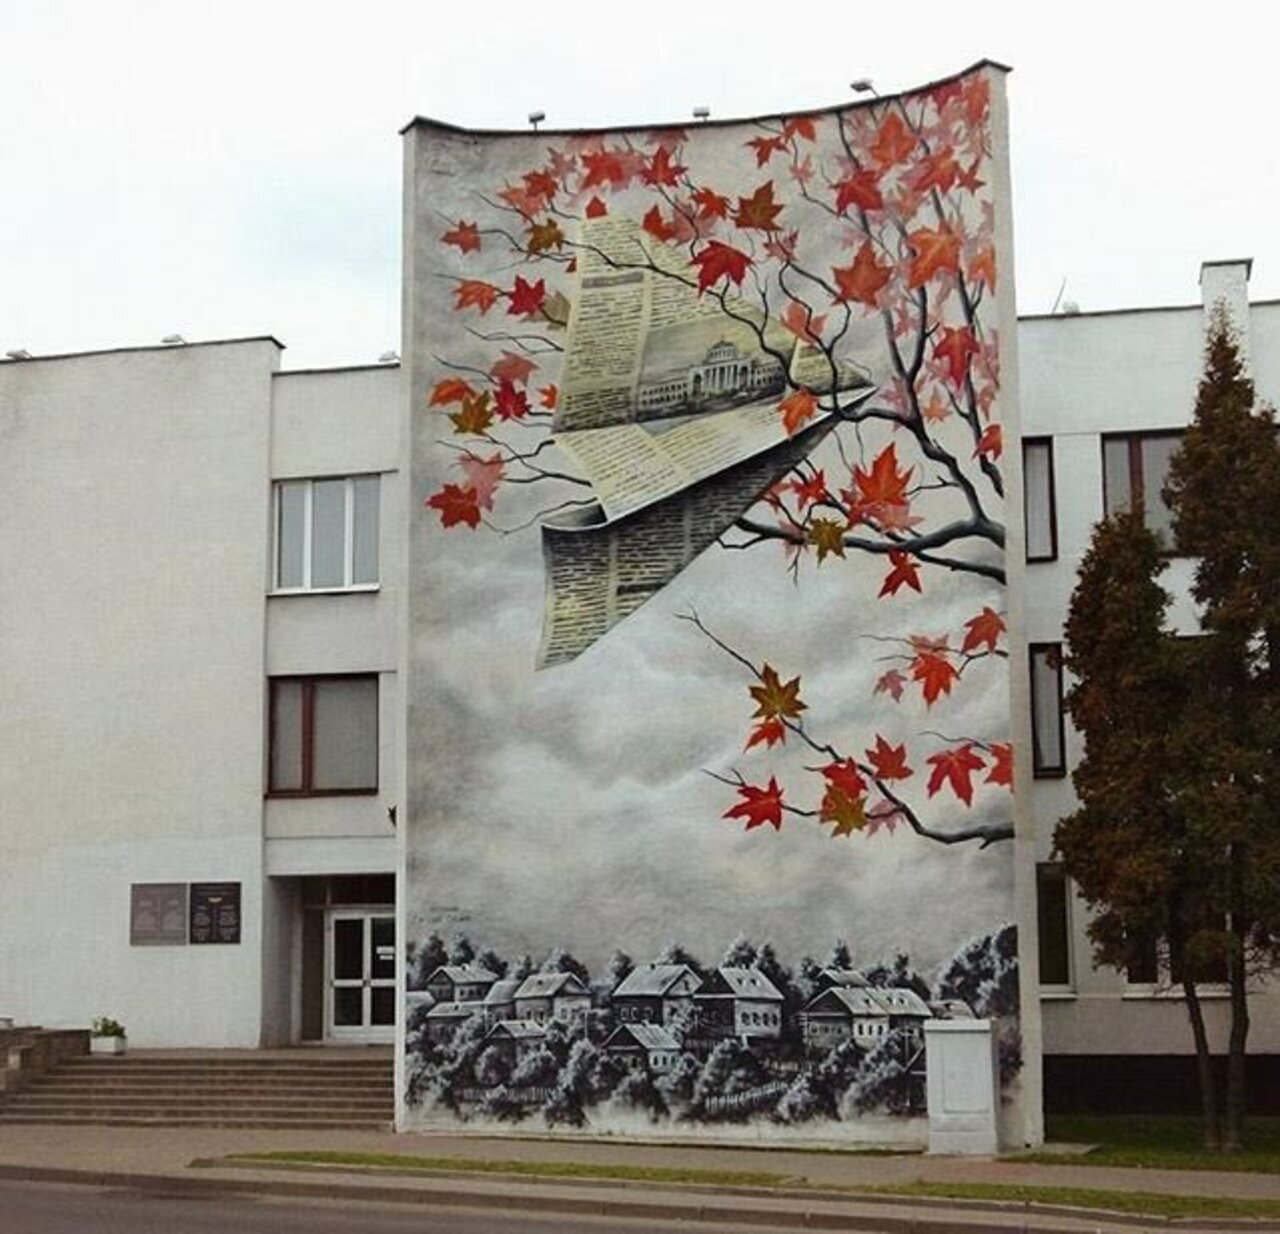 New Street Art by MUTUS in Belarus 

#art #graffiti #mural #streetart https://t.co/iB3WyOzfDn